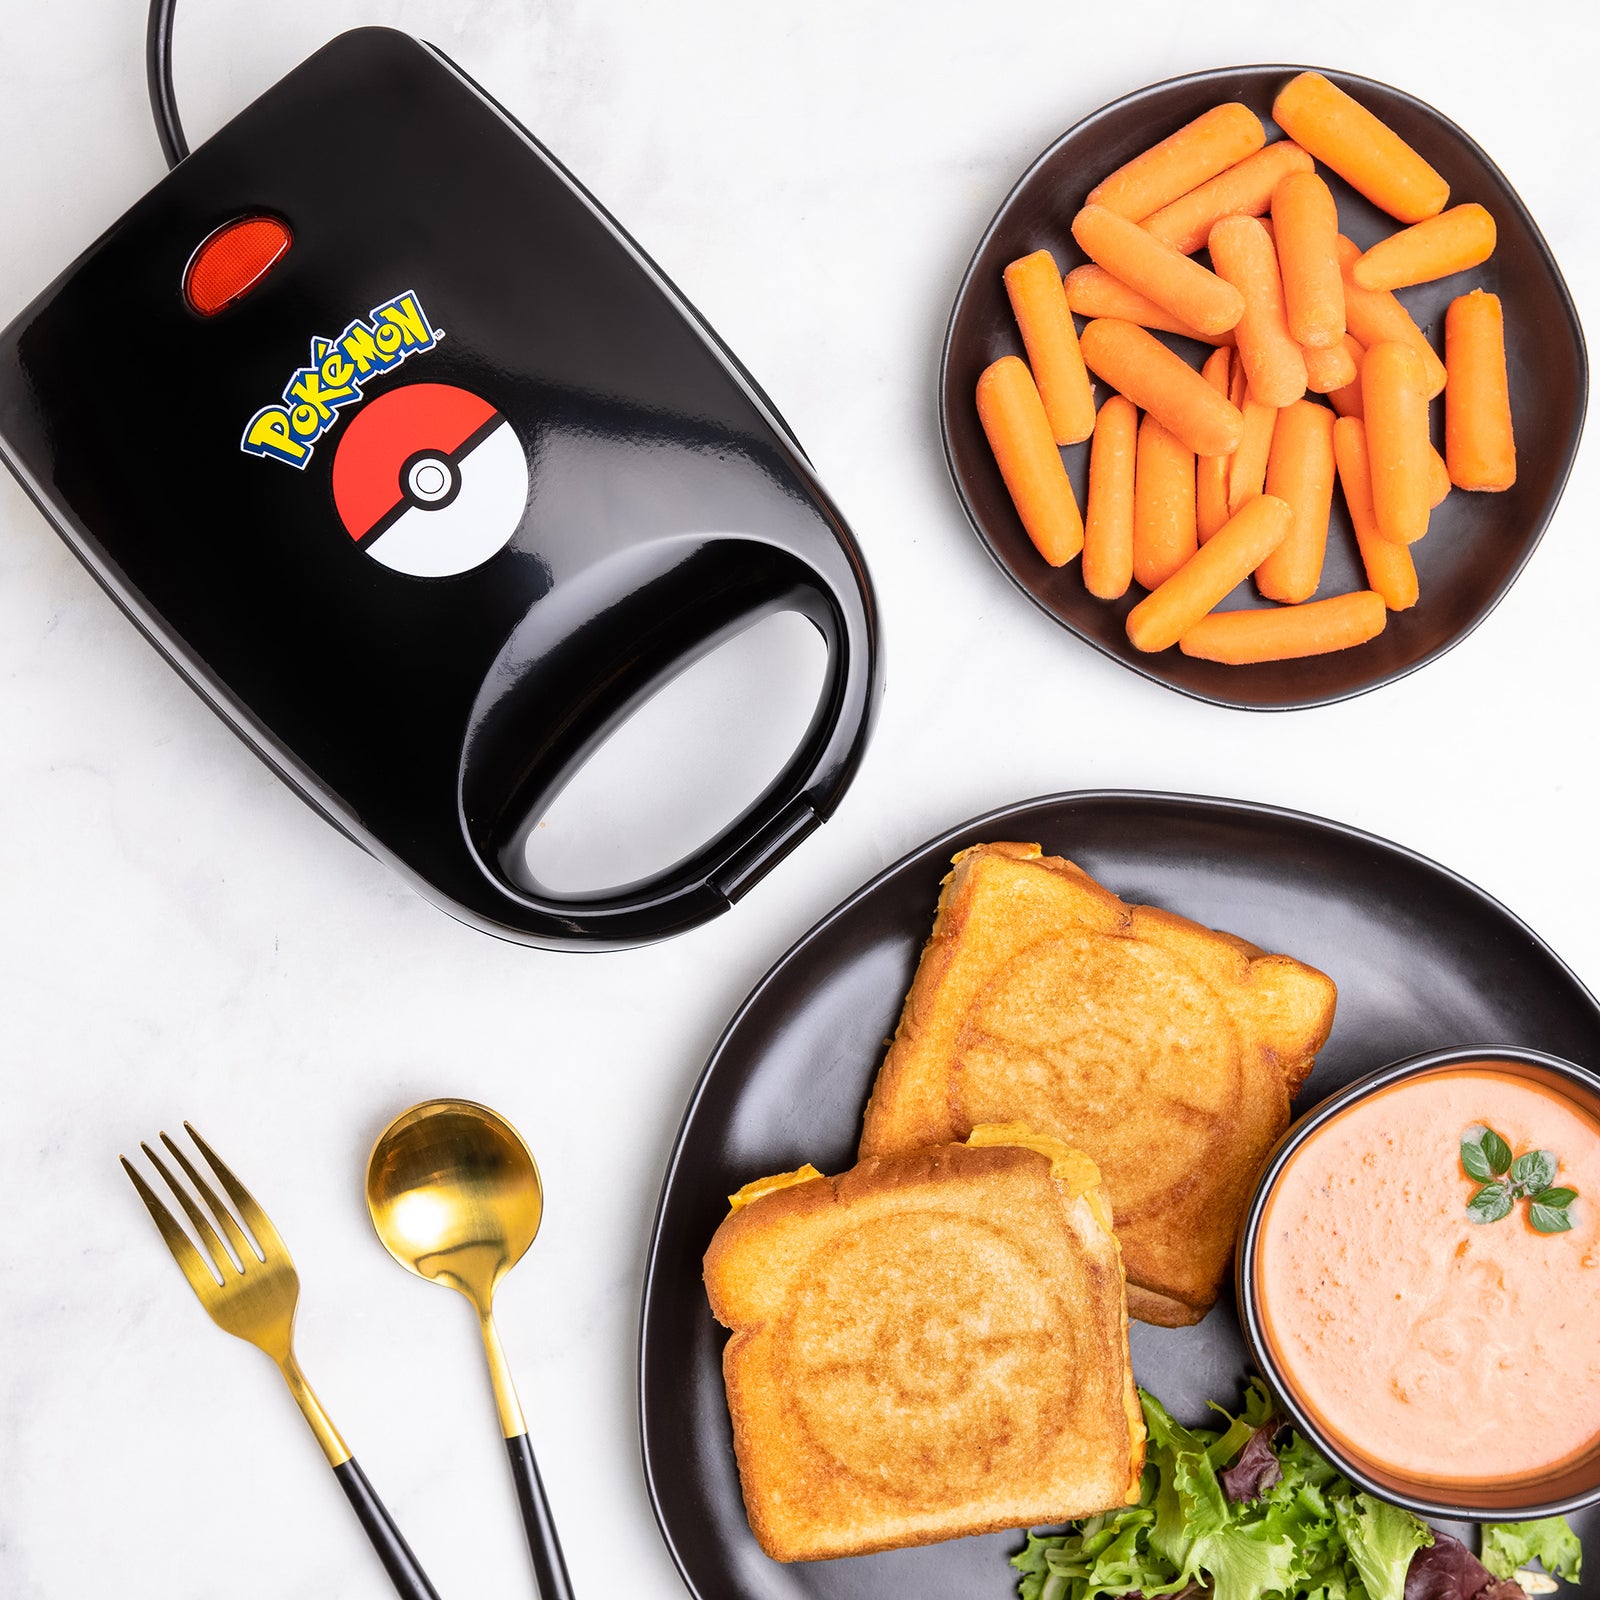 Pokémon Charmander Waffle Maker